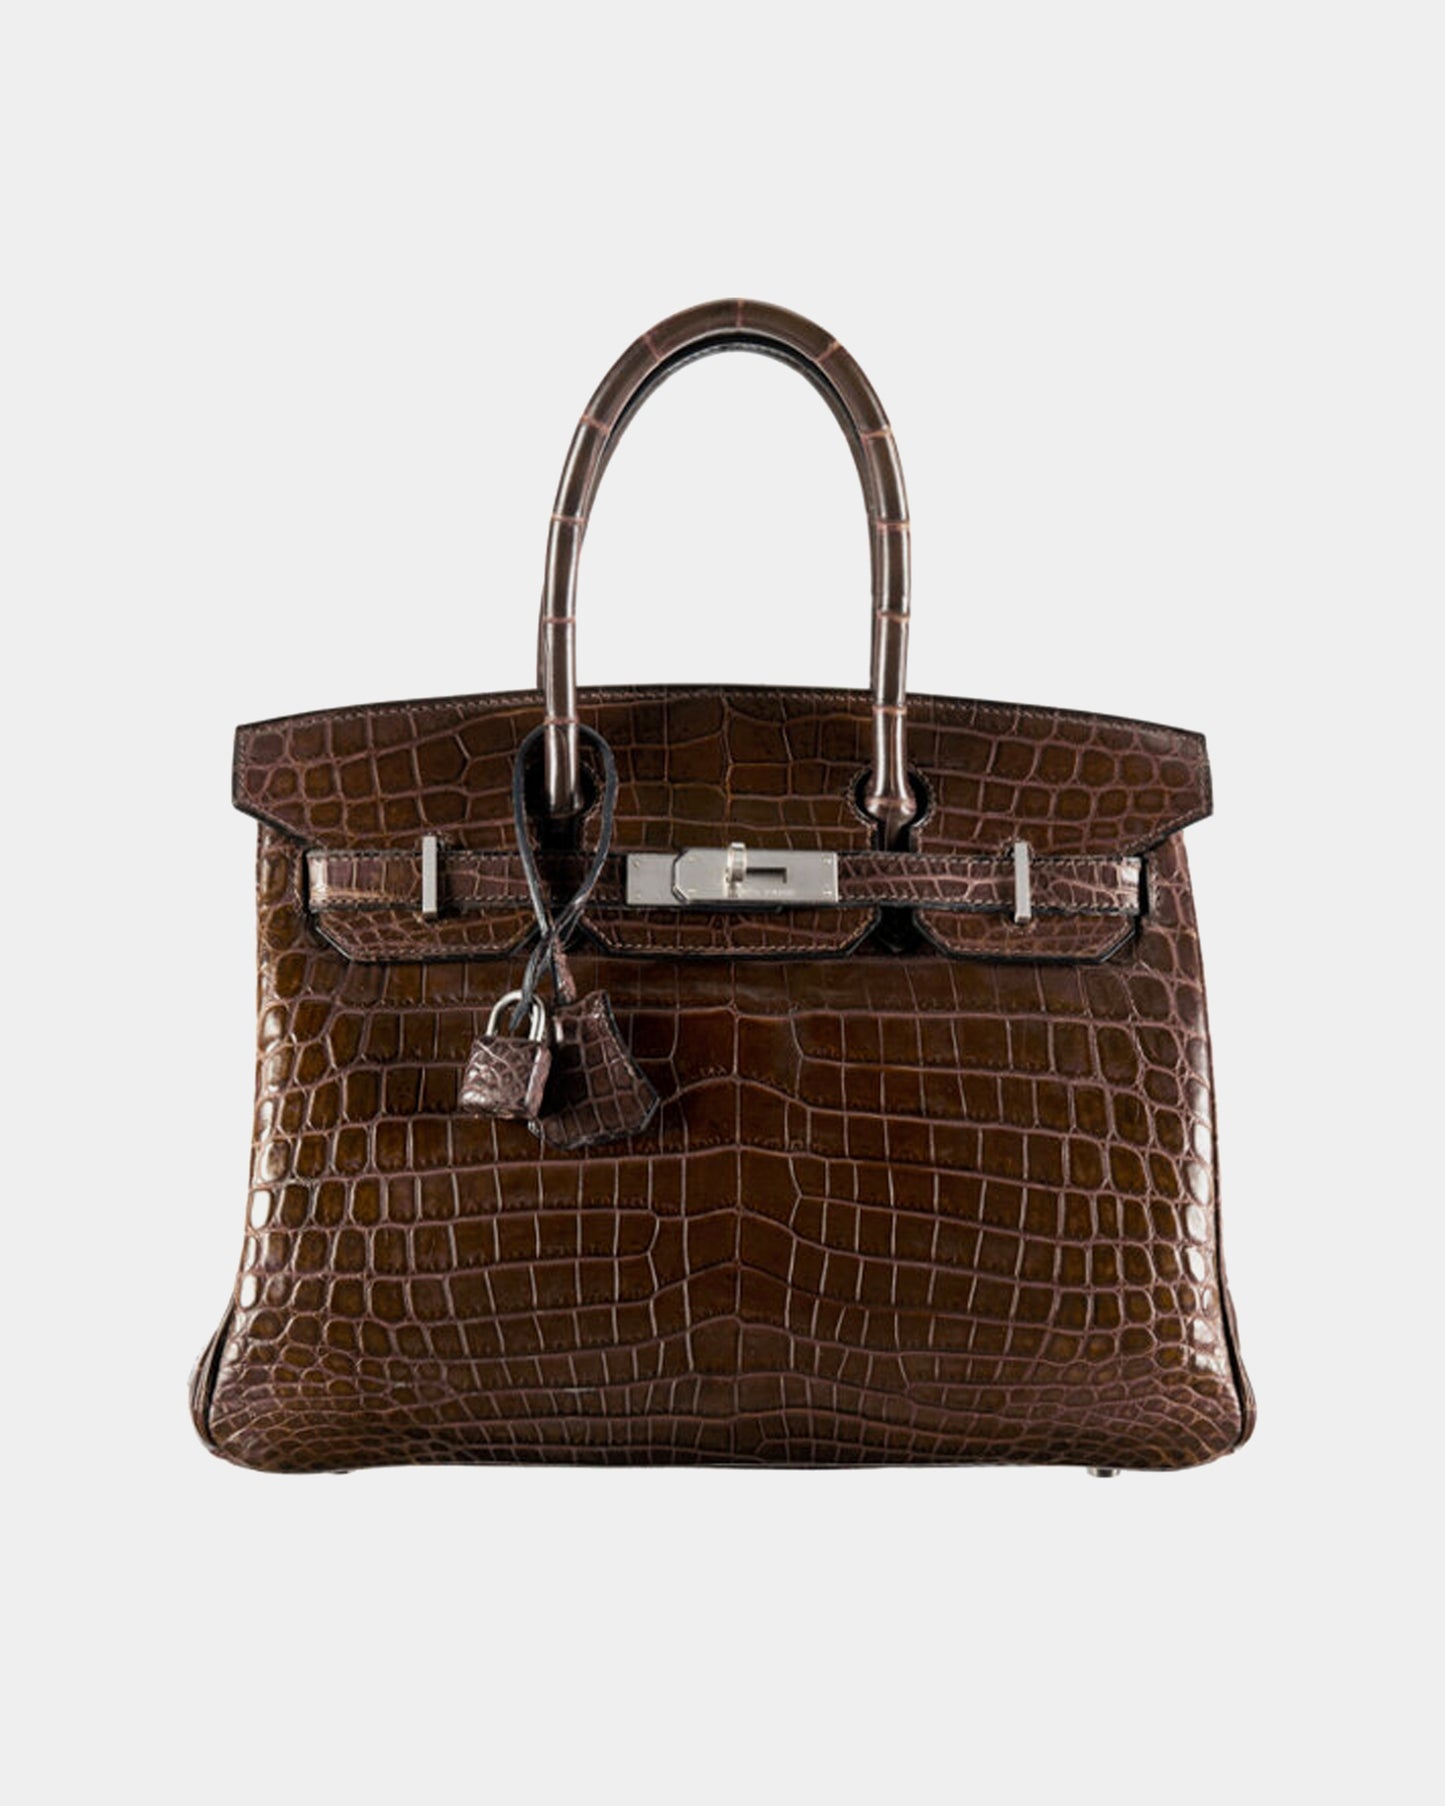 Hermès 30cm Matte Chocolate Niloticus Crocodile Birkin Bag with Brushed Palladium Hardware